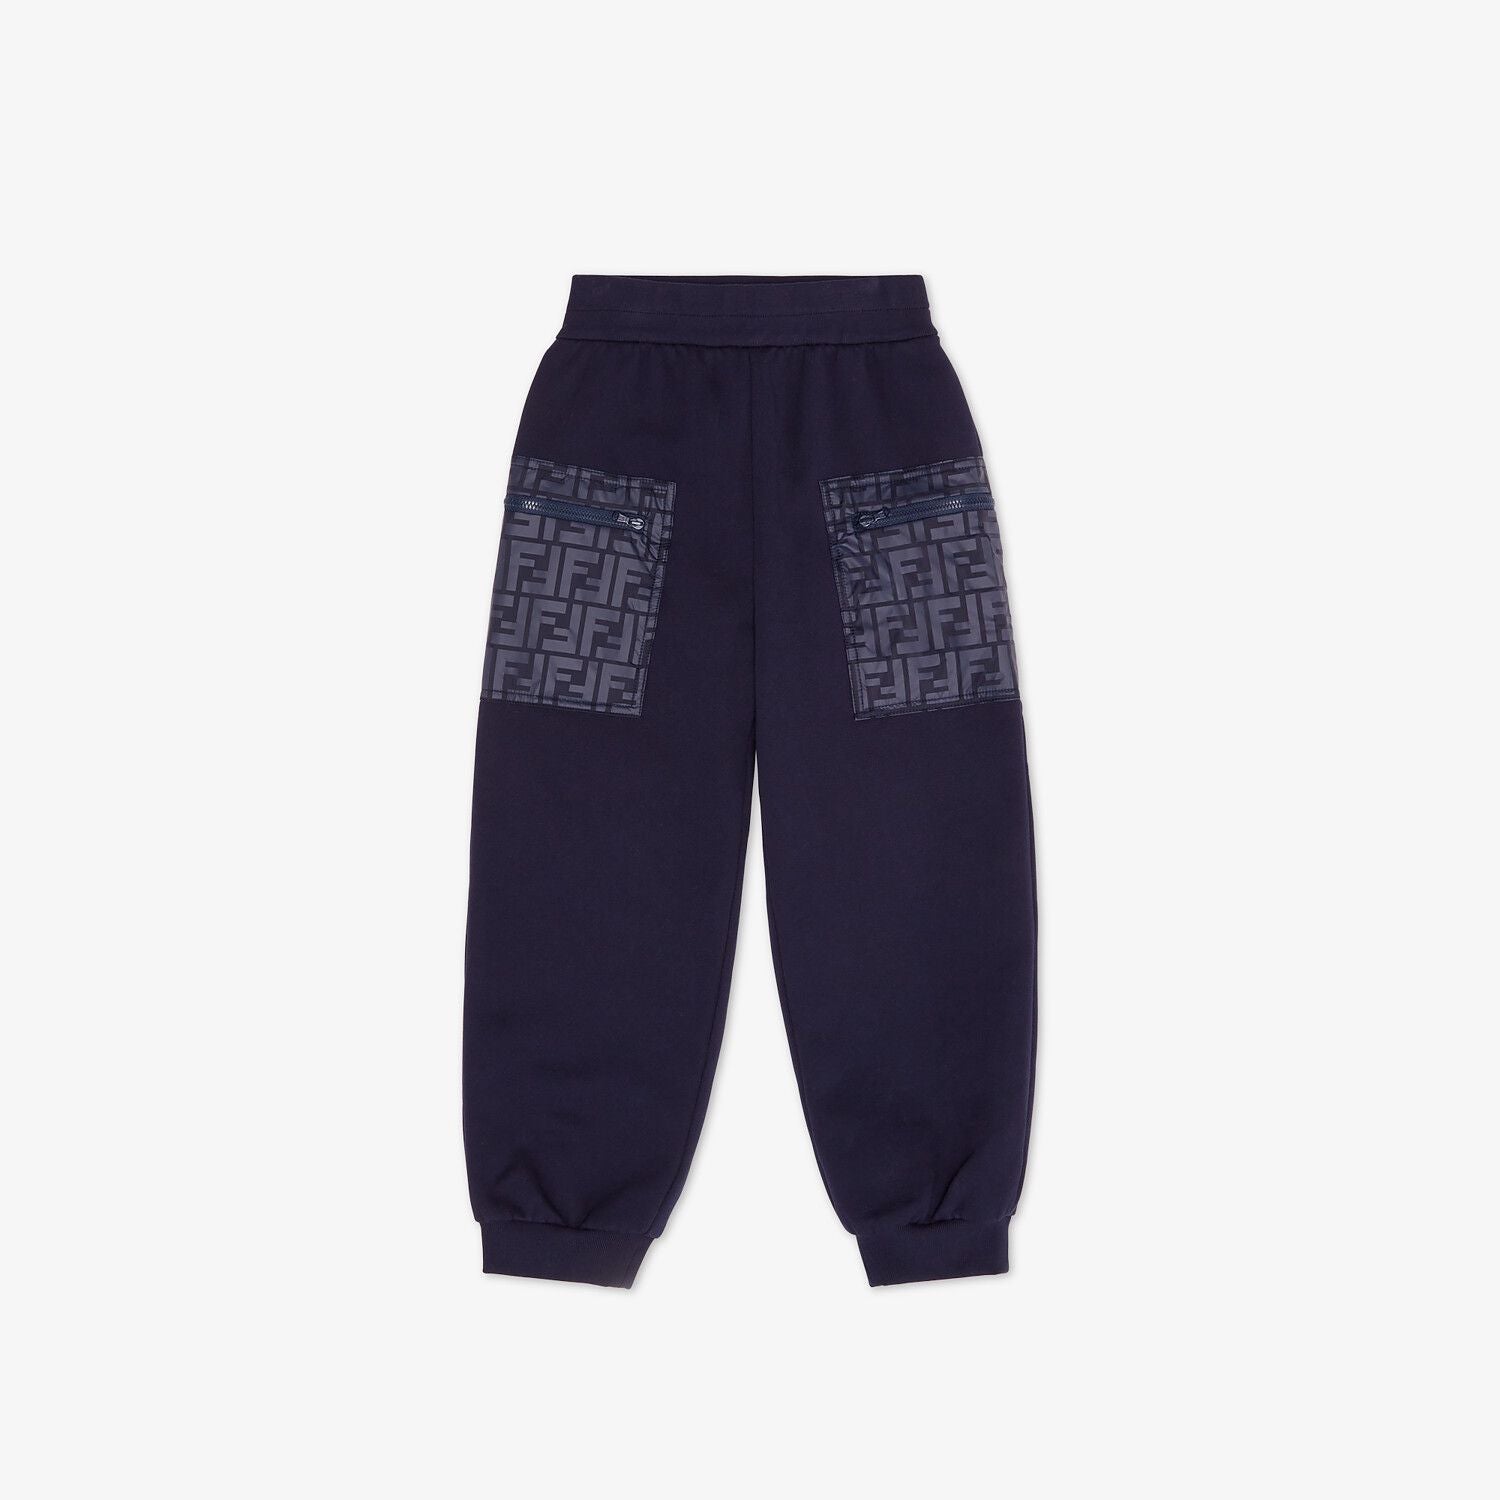 Fleece and nylon junior trousers,Navy blue